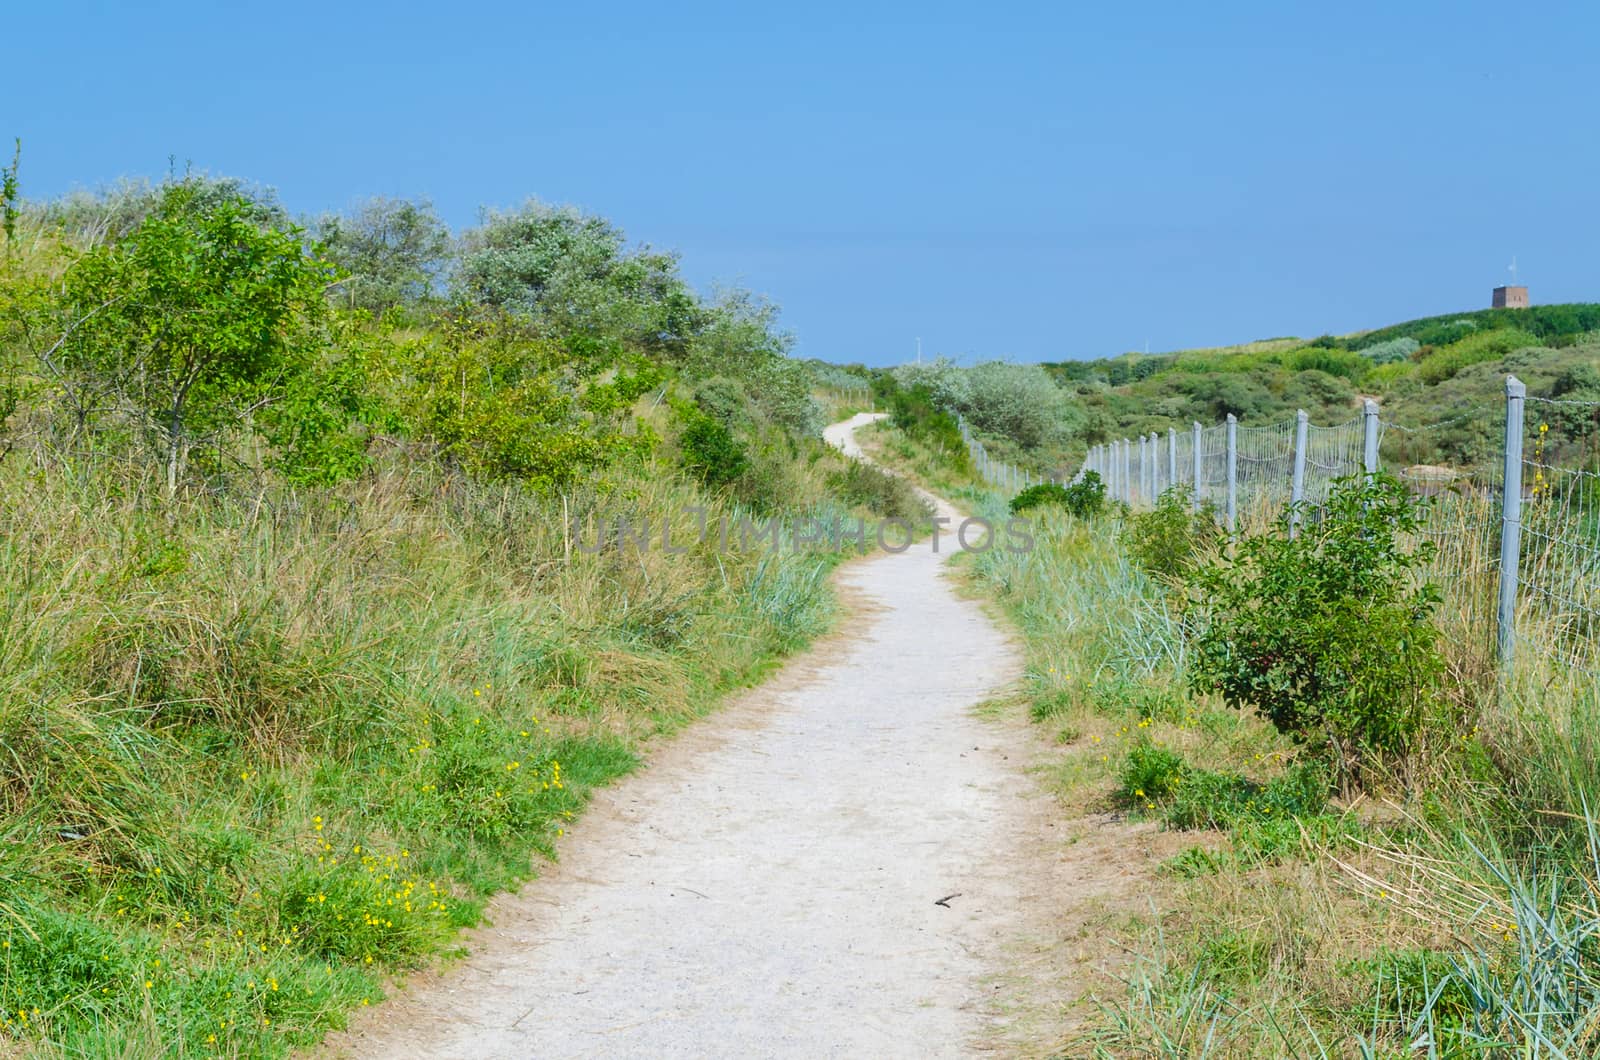 A path through a landscape of dunes towards the sea.